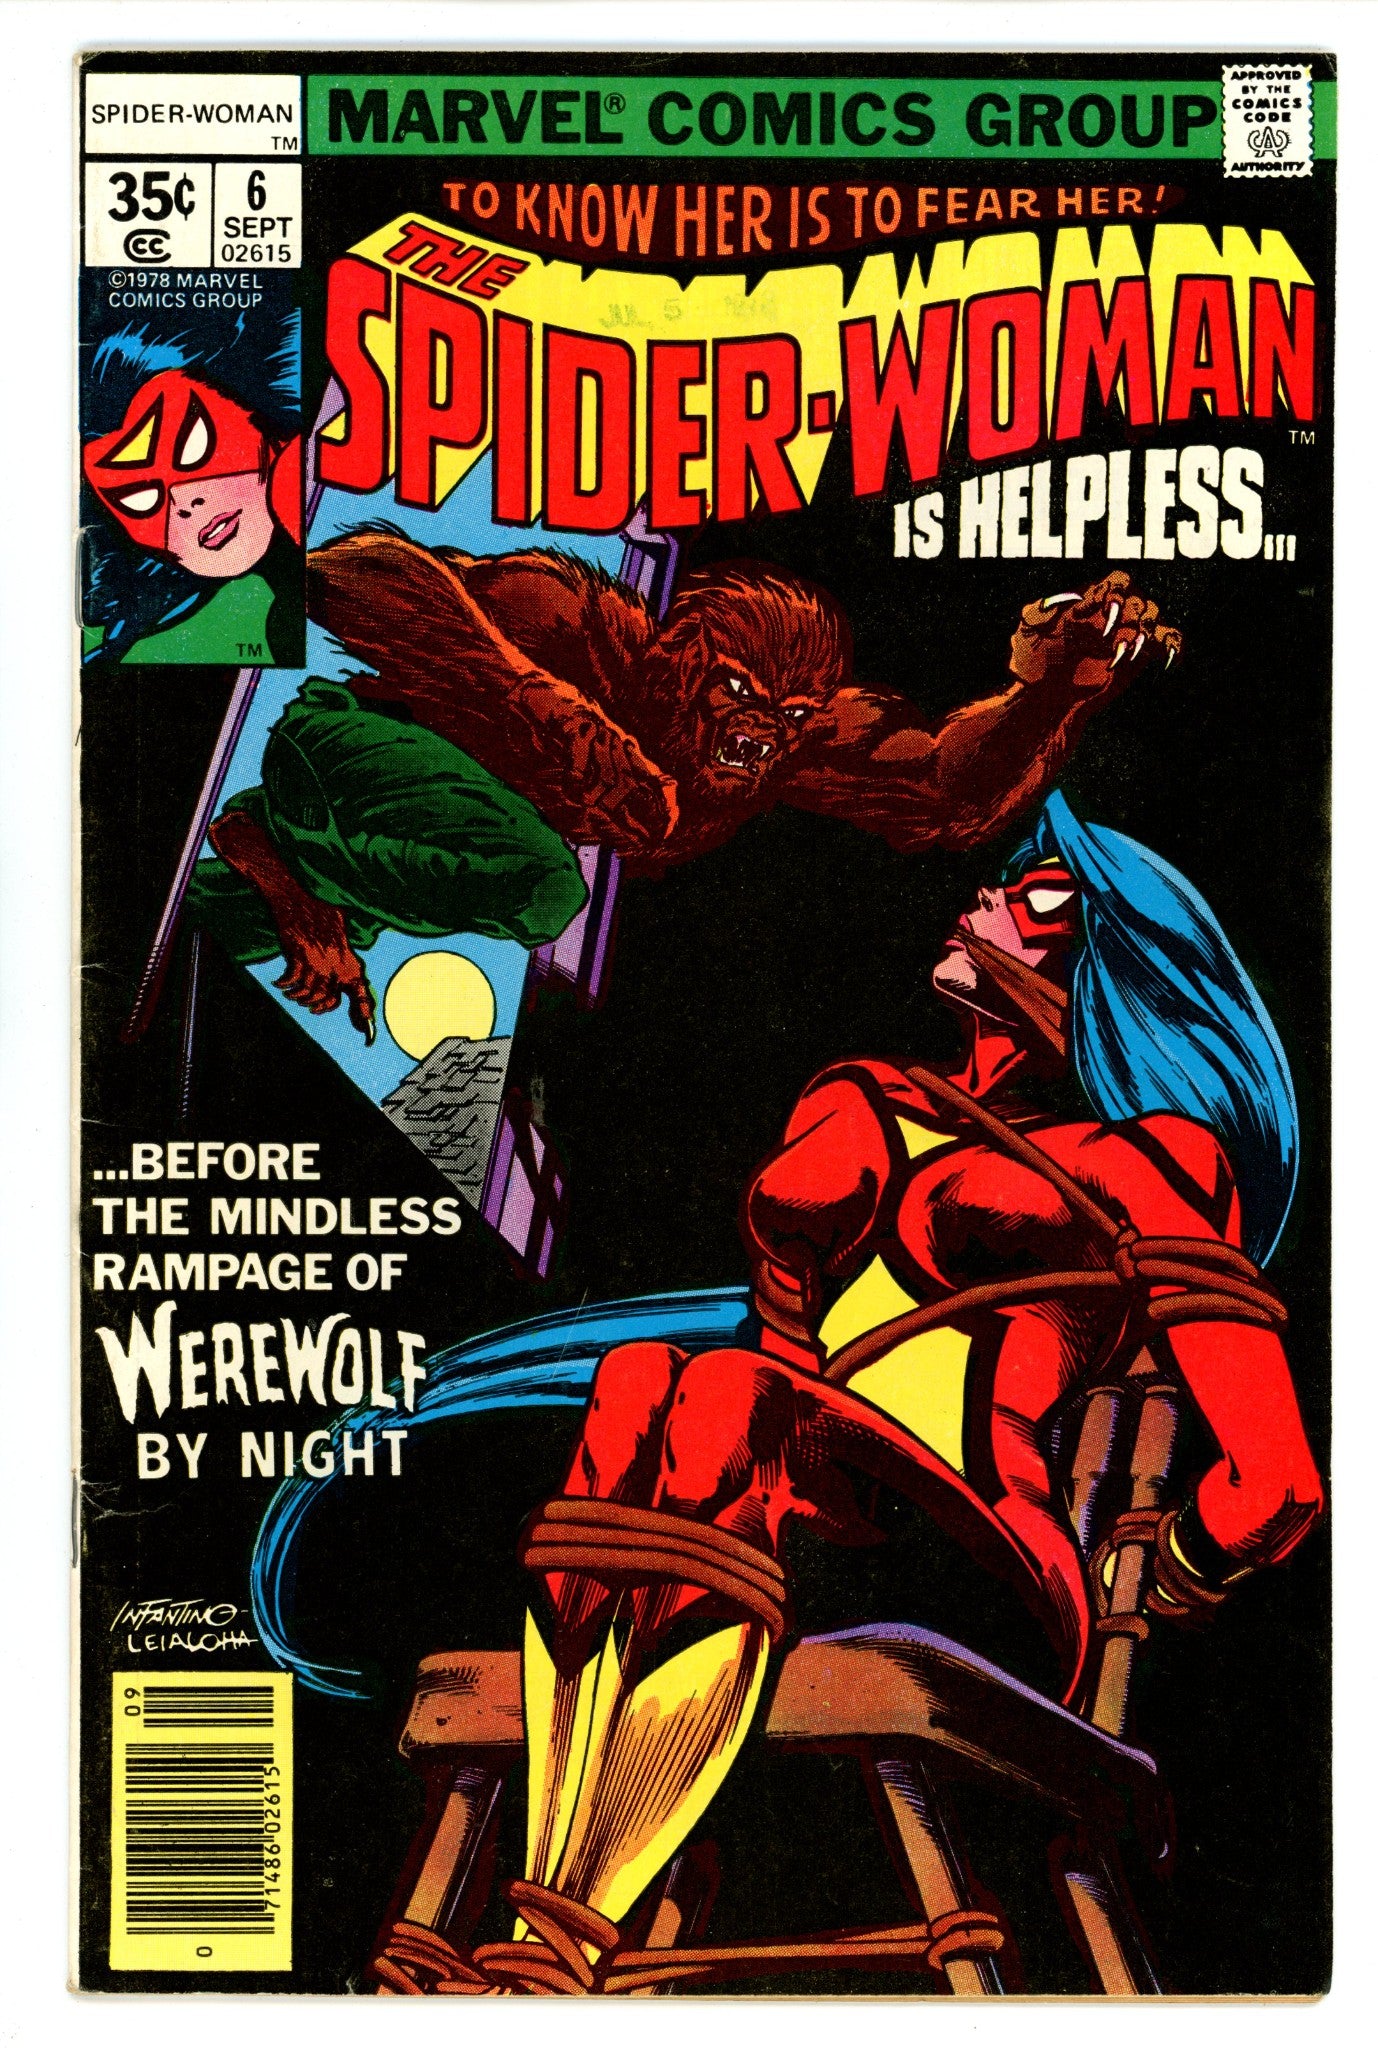 Spider-Woman Vol 1 6 VG/FN (5.0) (1978) 